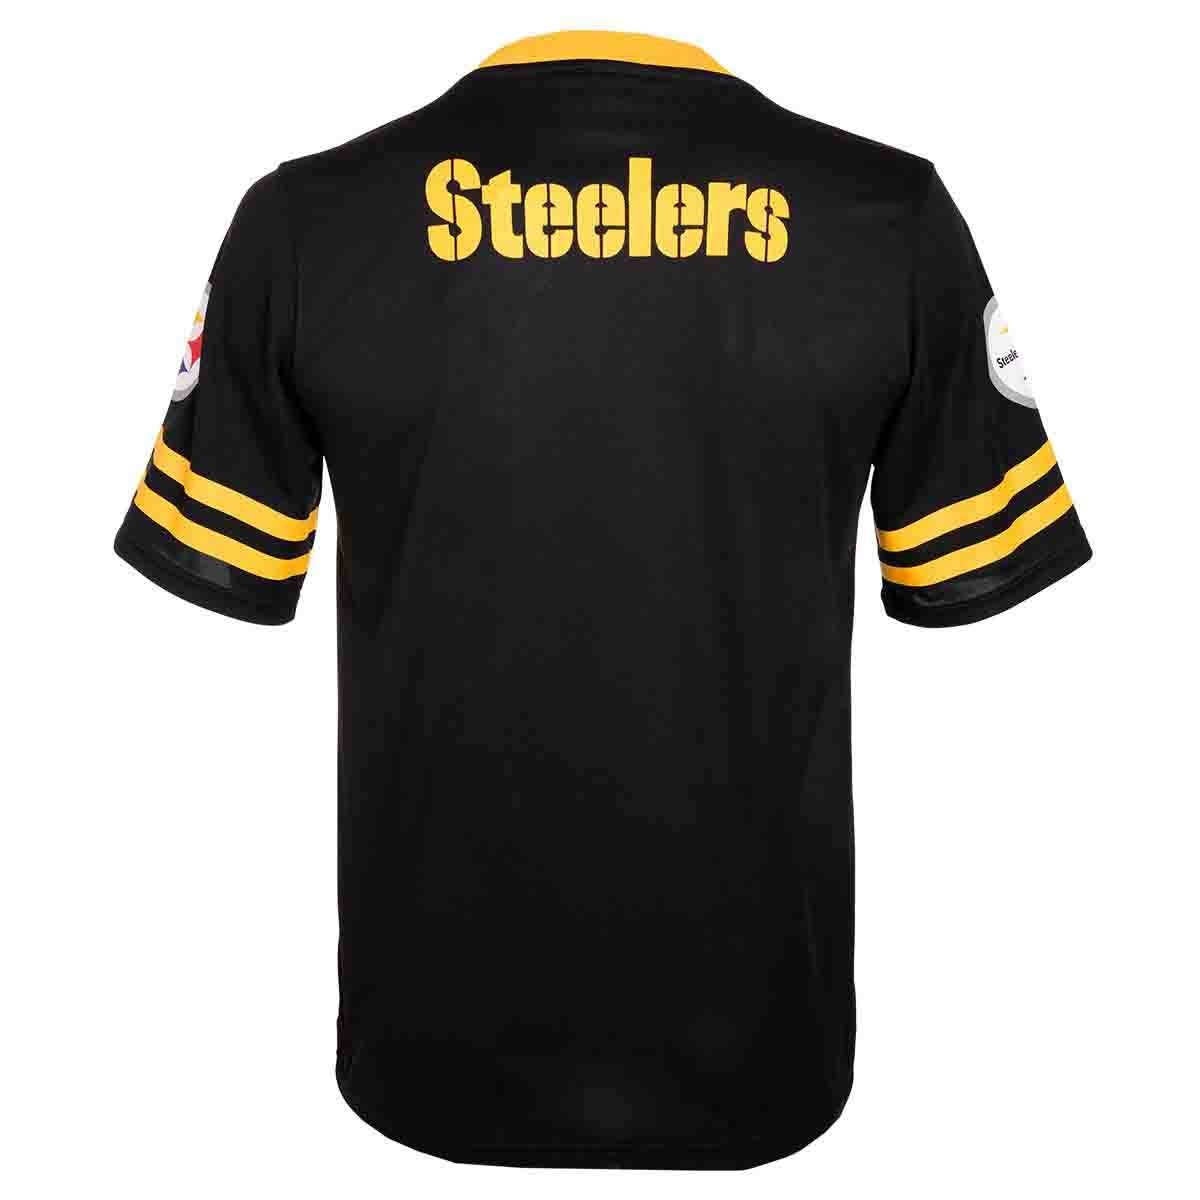 Jersey  Steelers Nfl - Caballero